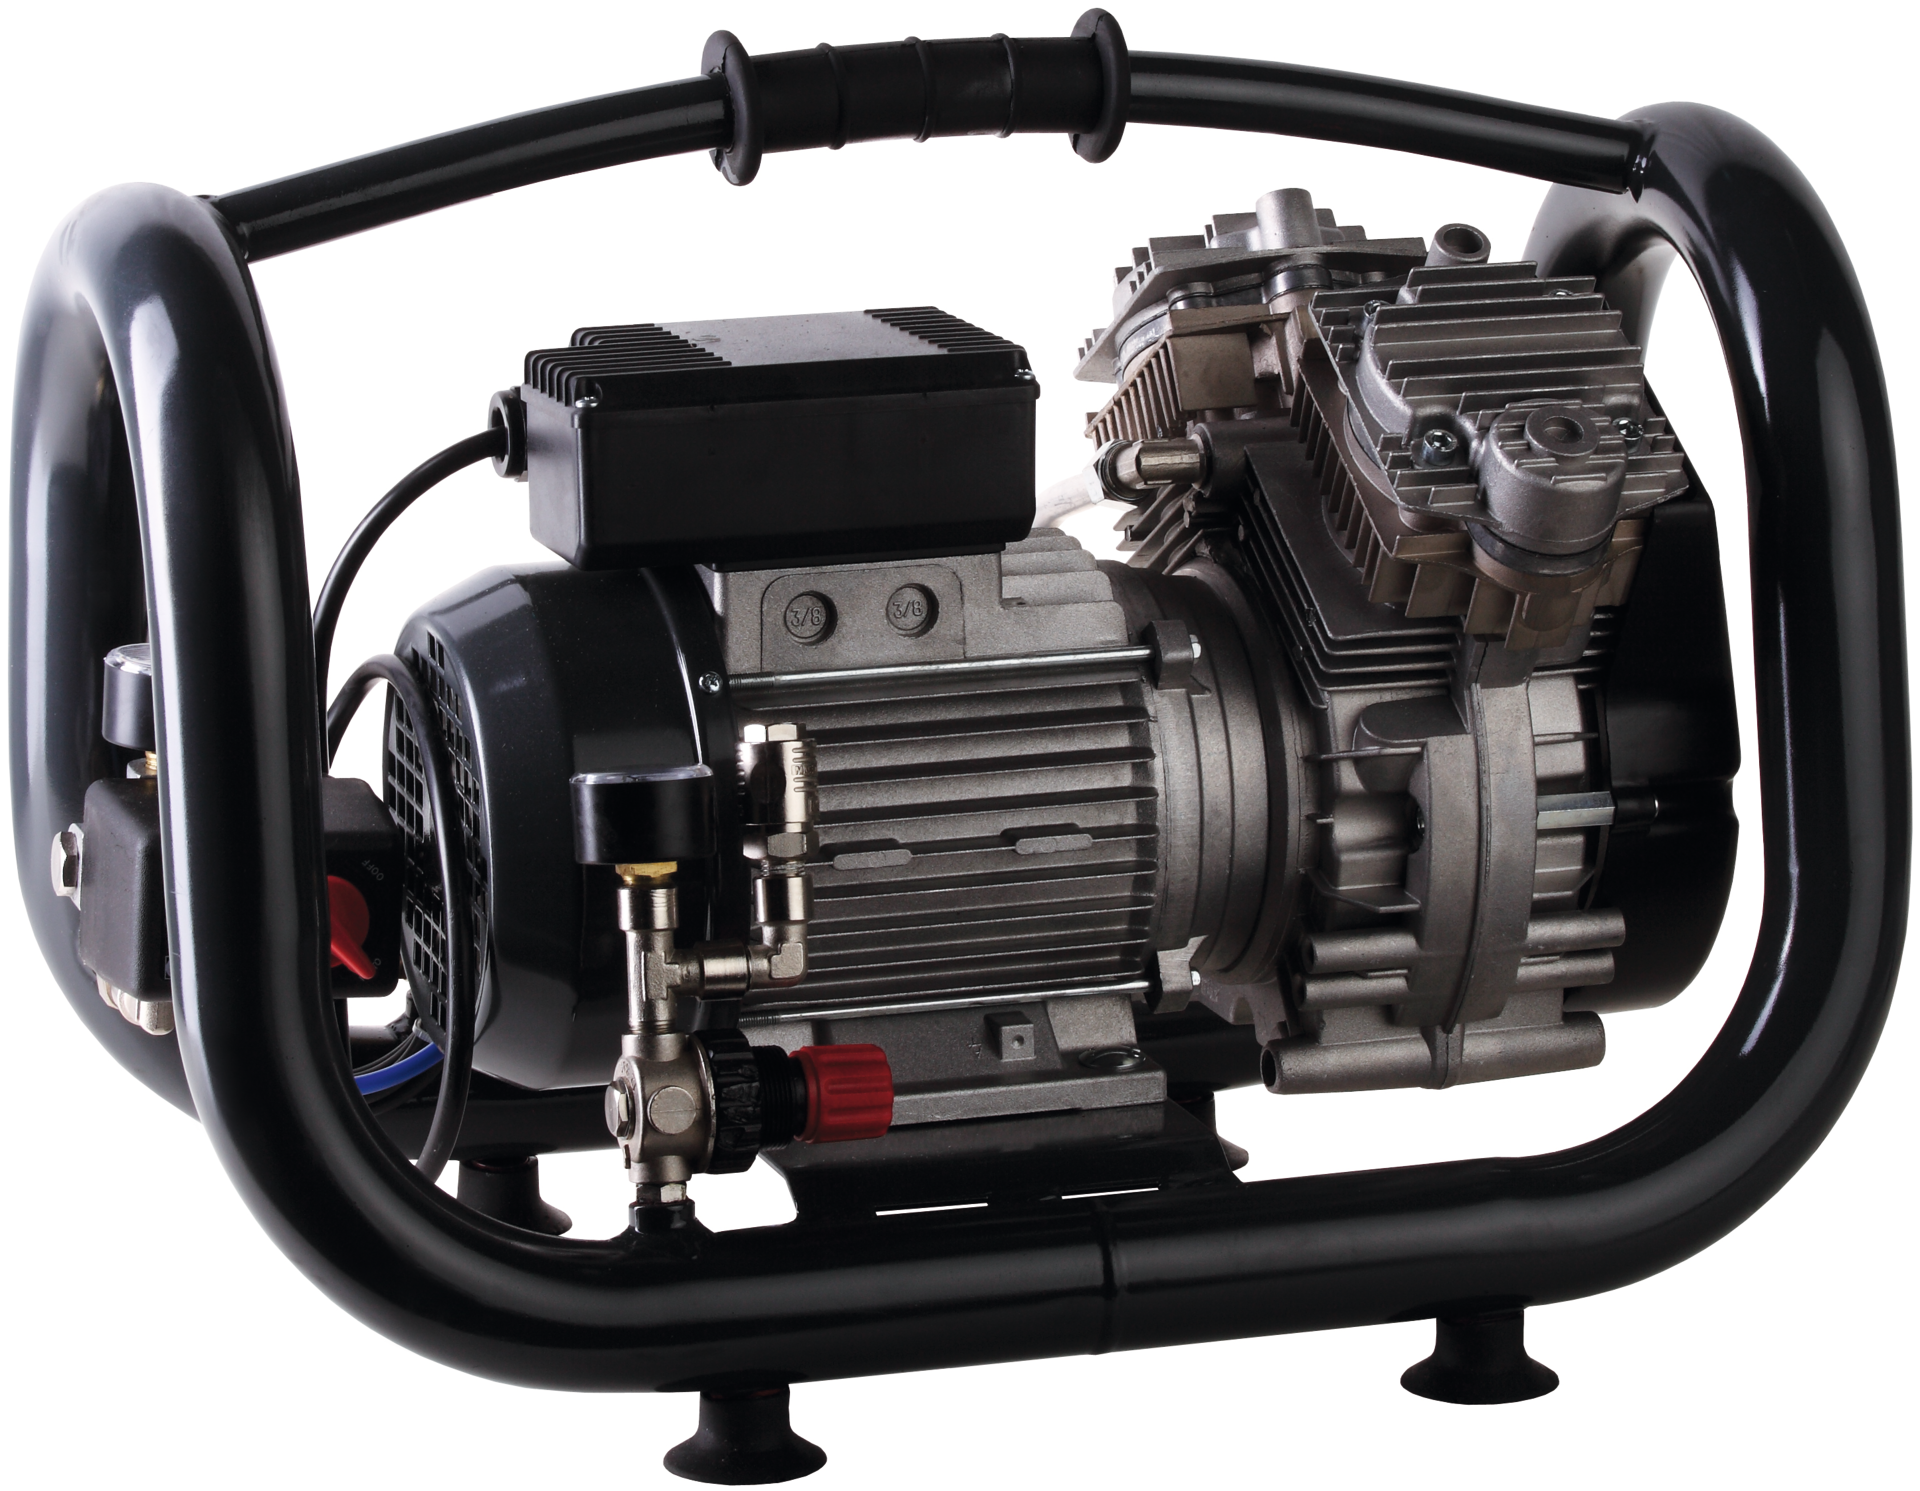 Kolbenkompressor tragbar und ölfrei Extreme 240-5 Aerotec Extreme 240-5 72dB ölfrei 230V 10 bar